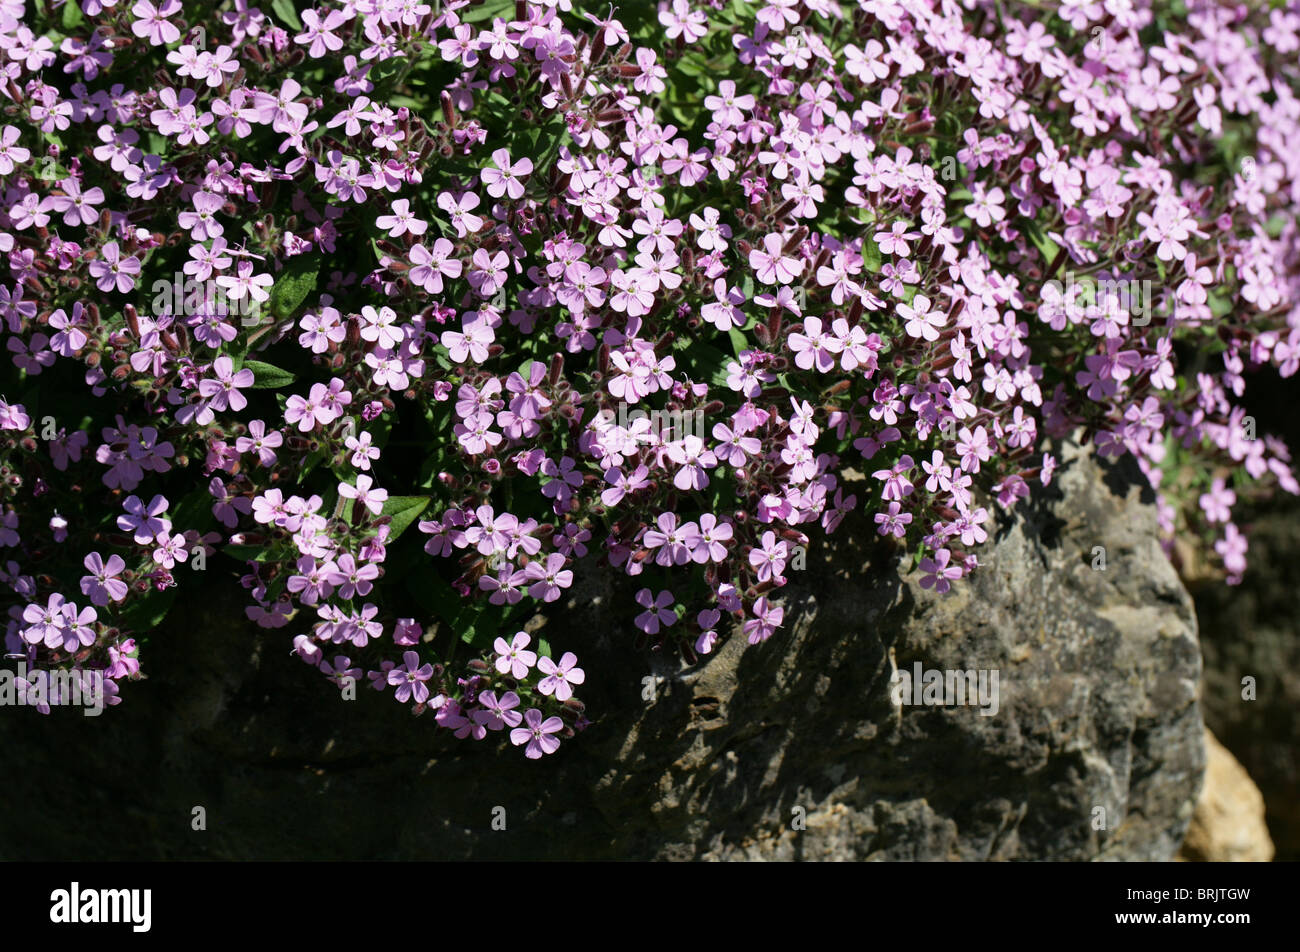 Rock Soapwort, Saponaria ocymoides, Caryophyllaceae, Europe Stock Photo